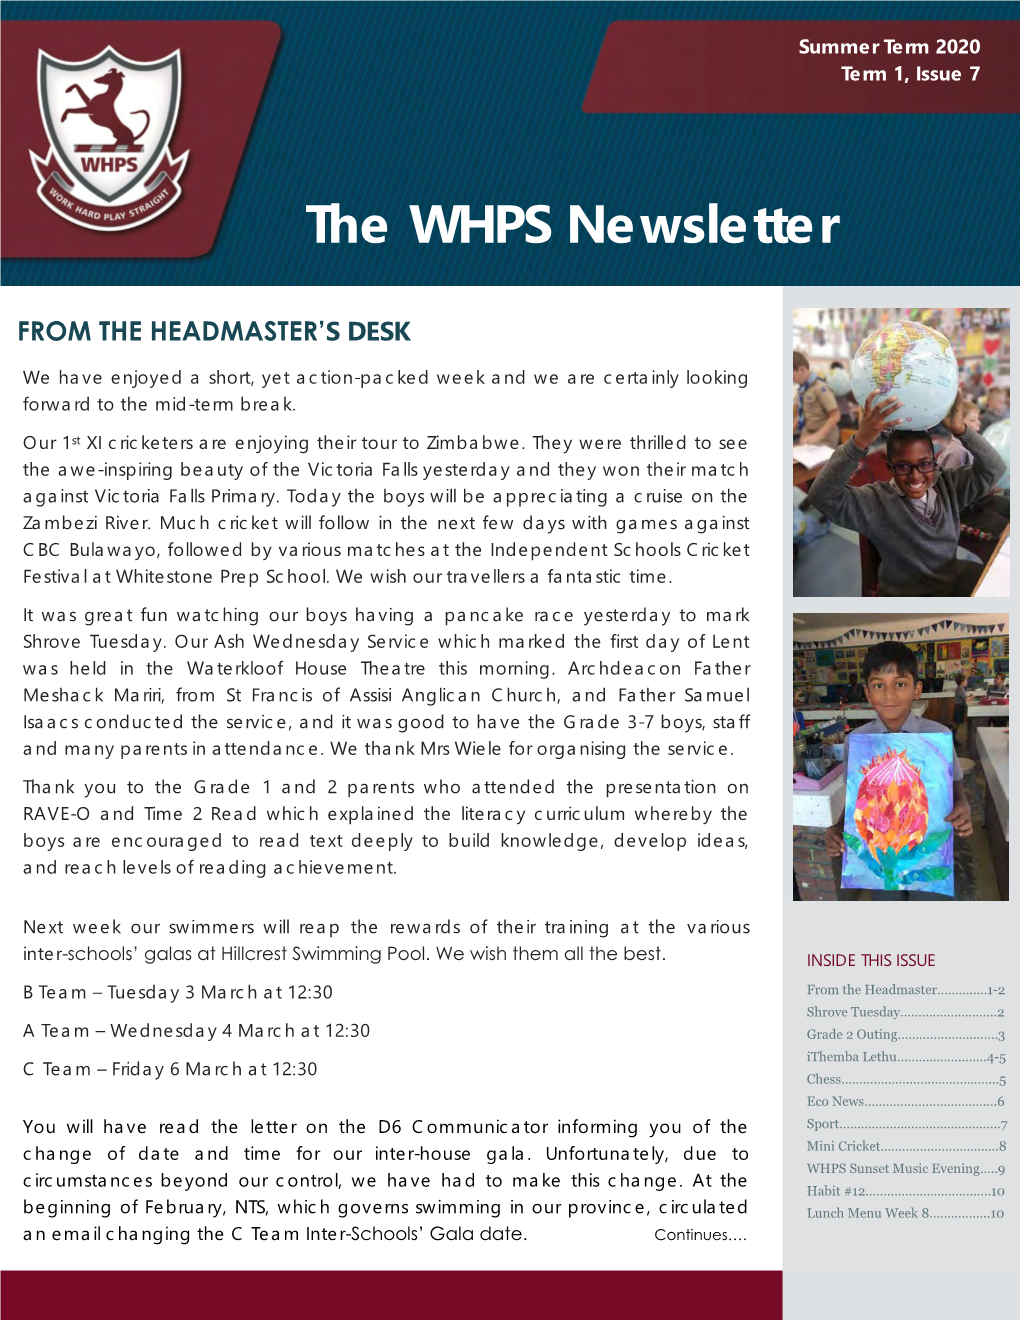 The WHPS Newsletter